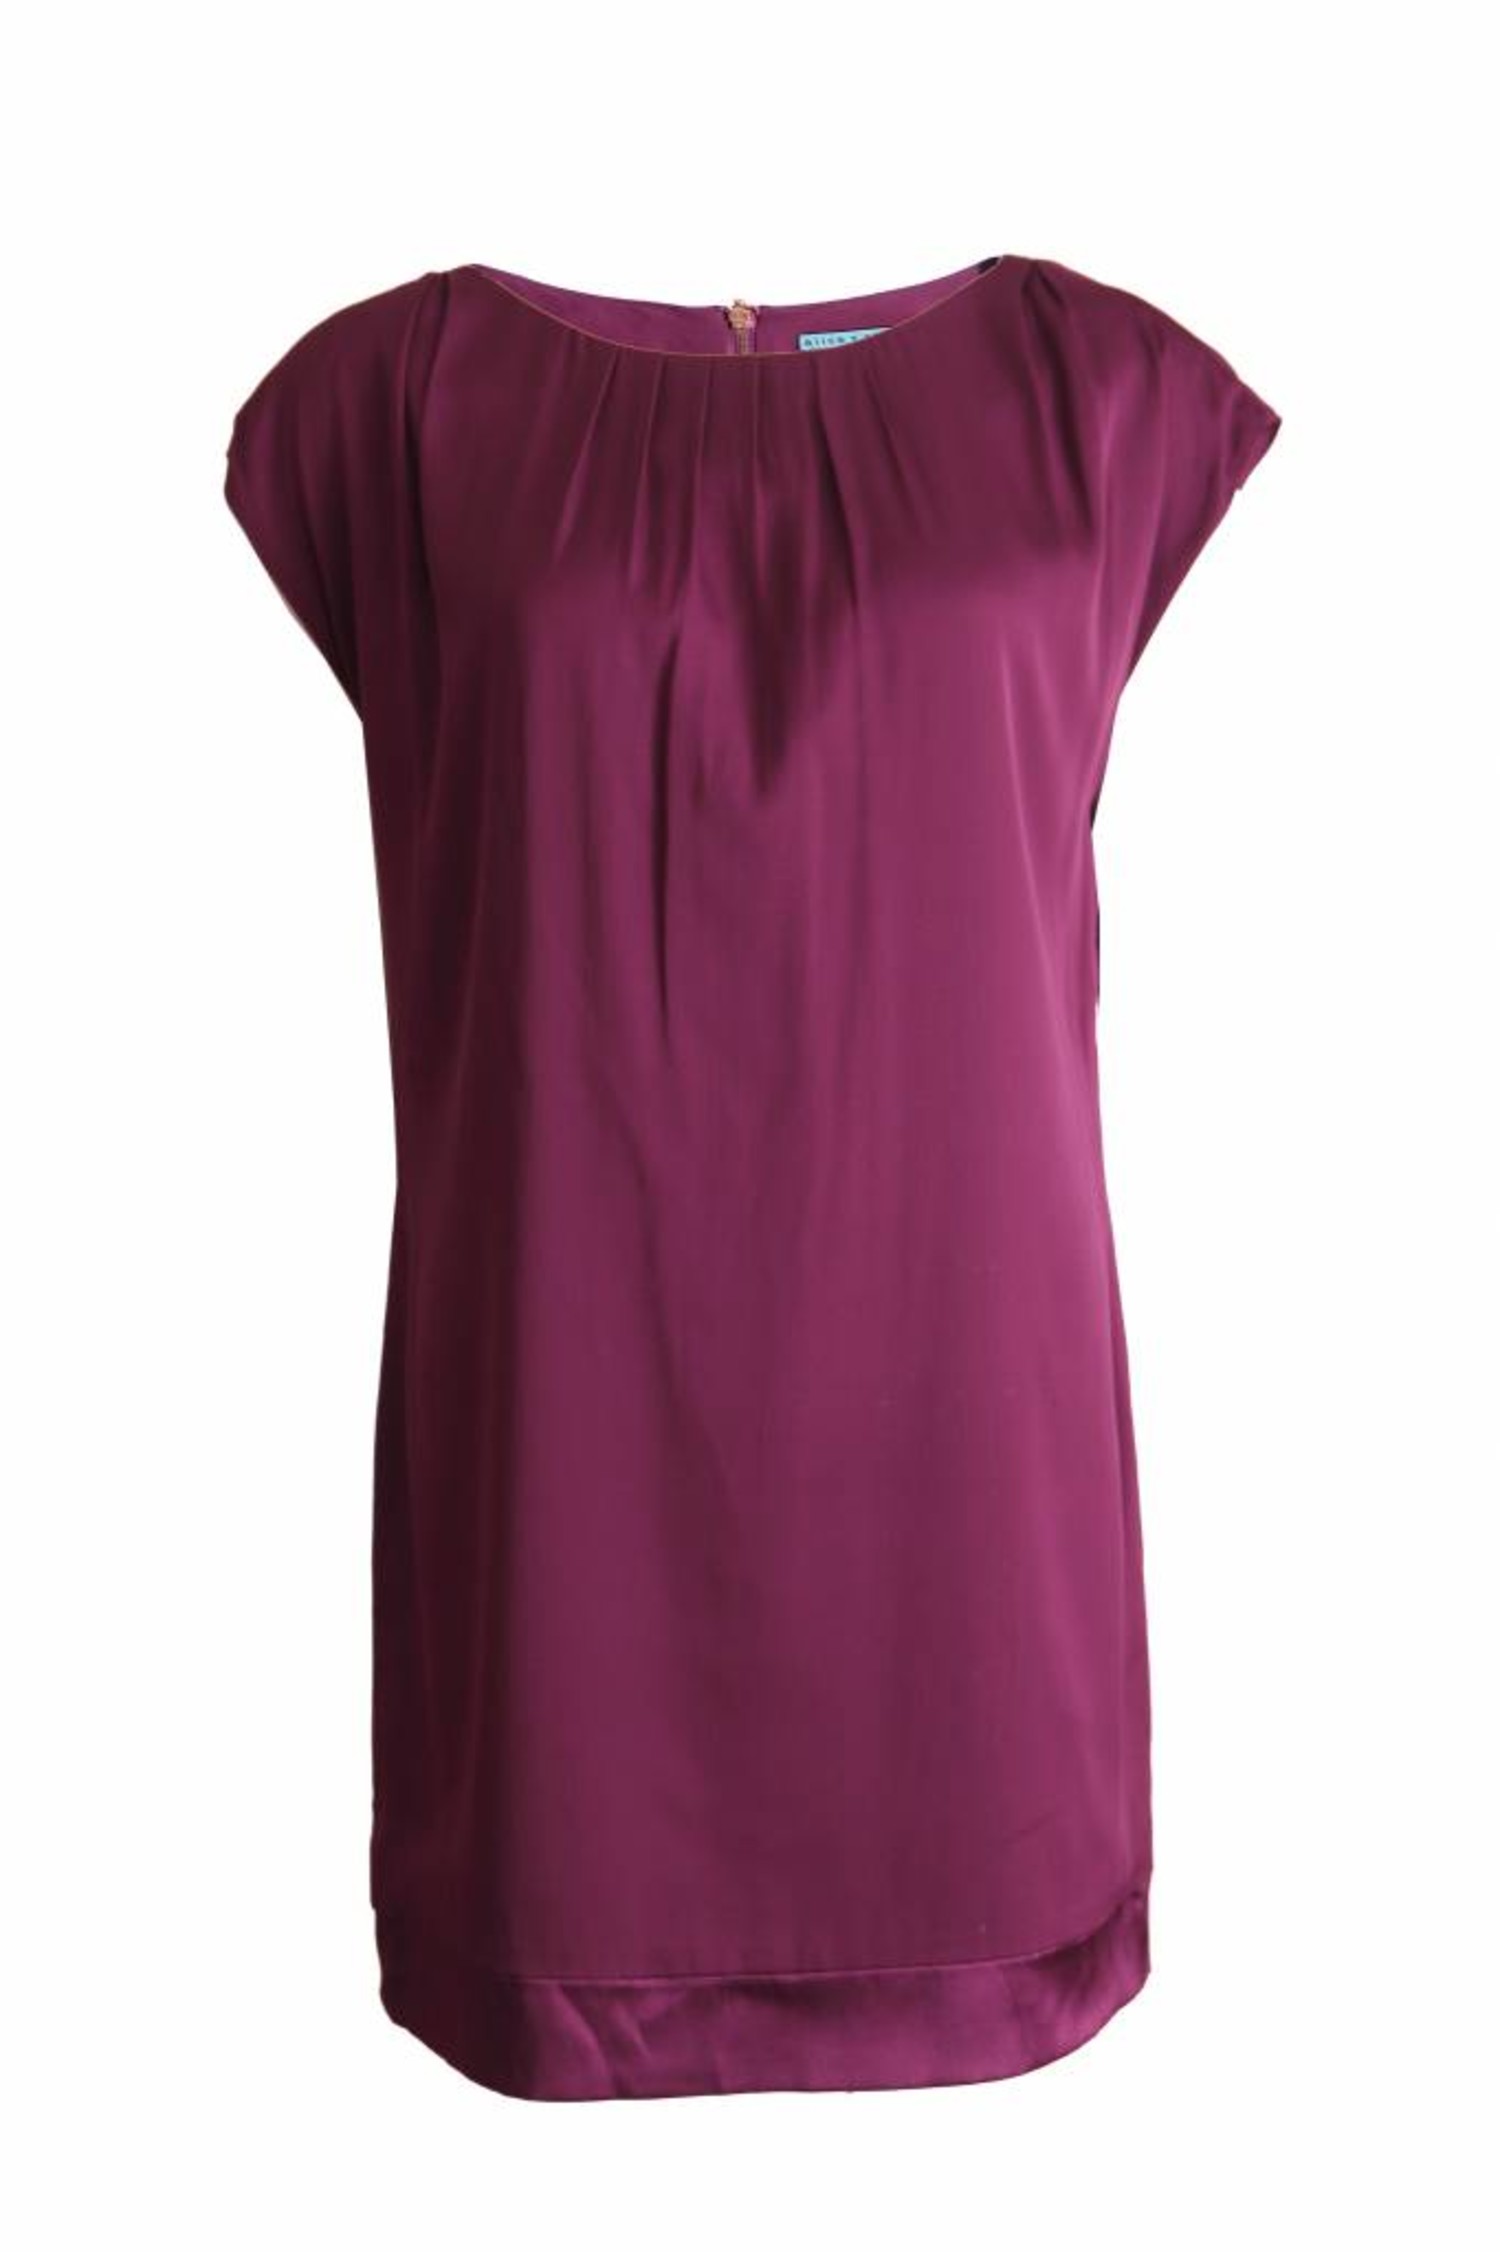 Buy > alice and olivia purple dress > in stock